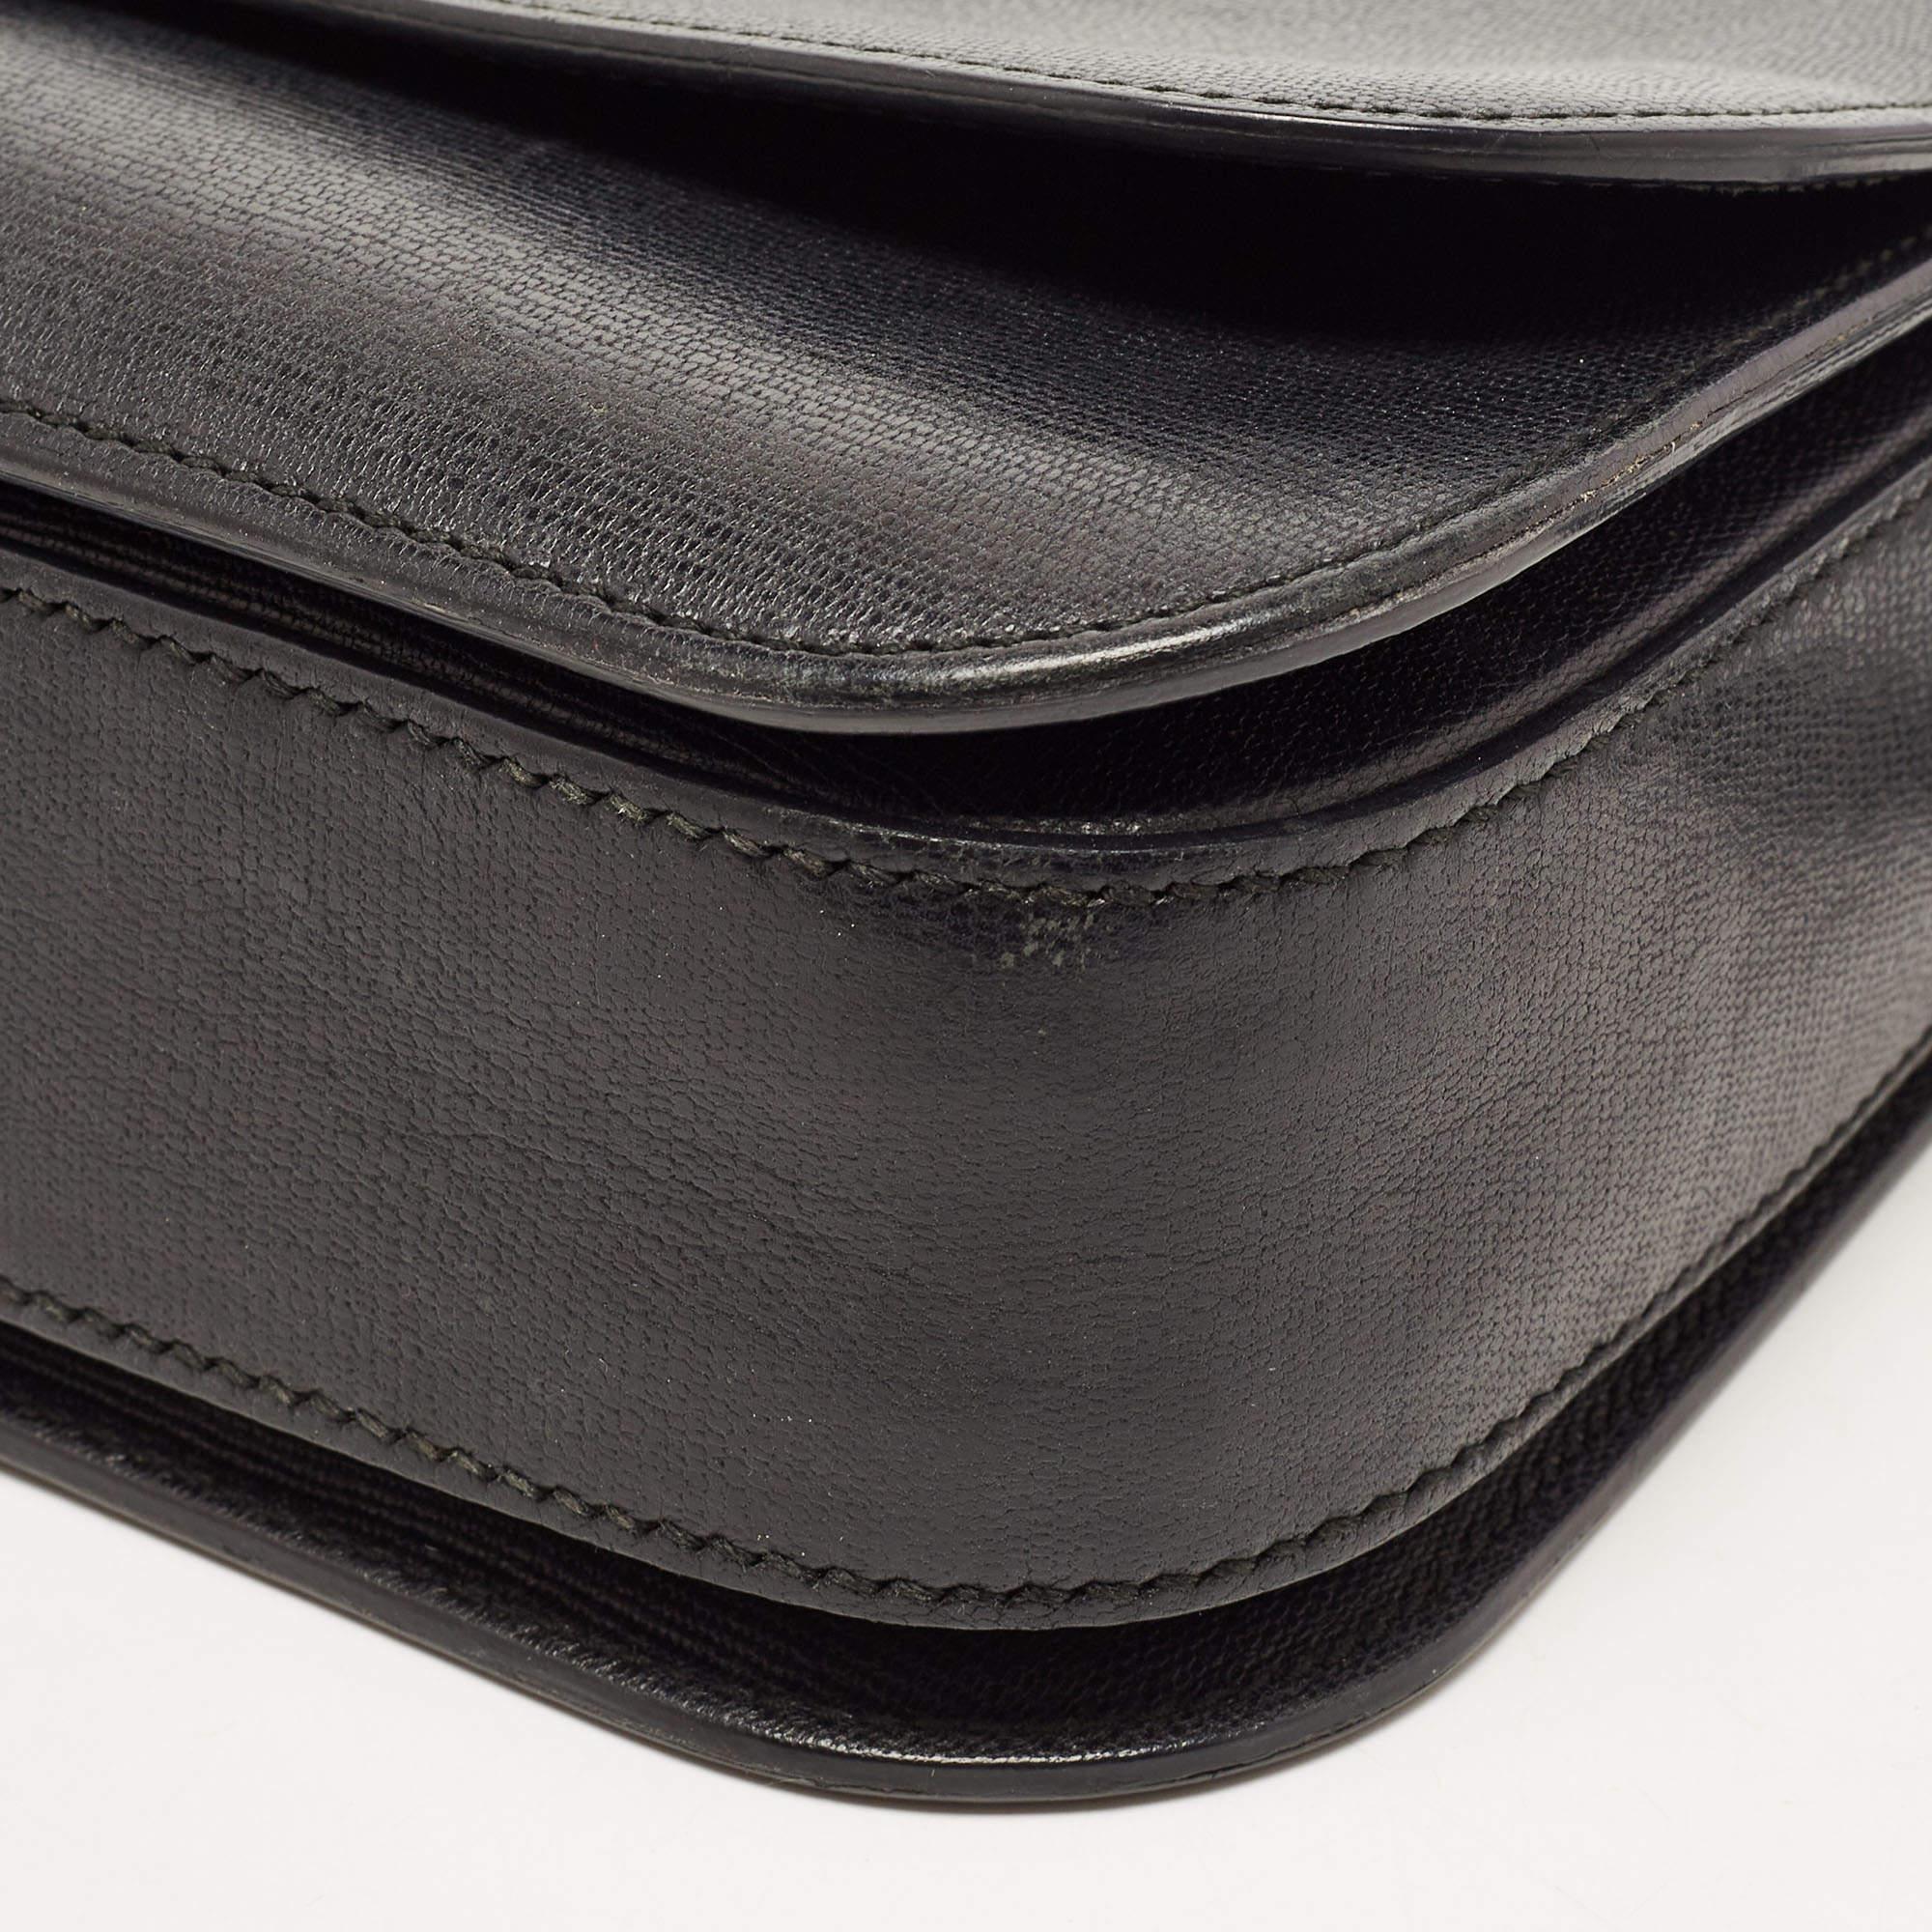 Yves Saint Laurent Black Leather Large Chyc Flap Shoulder Bag 11